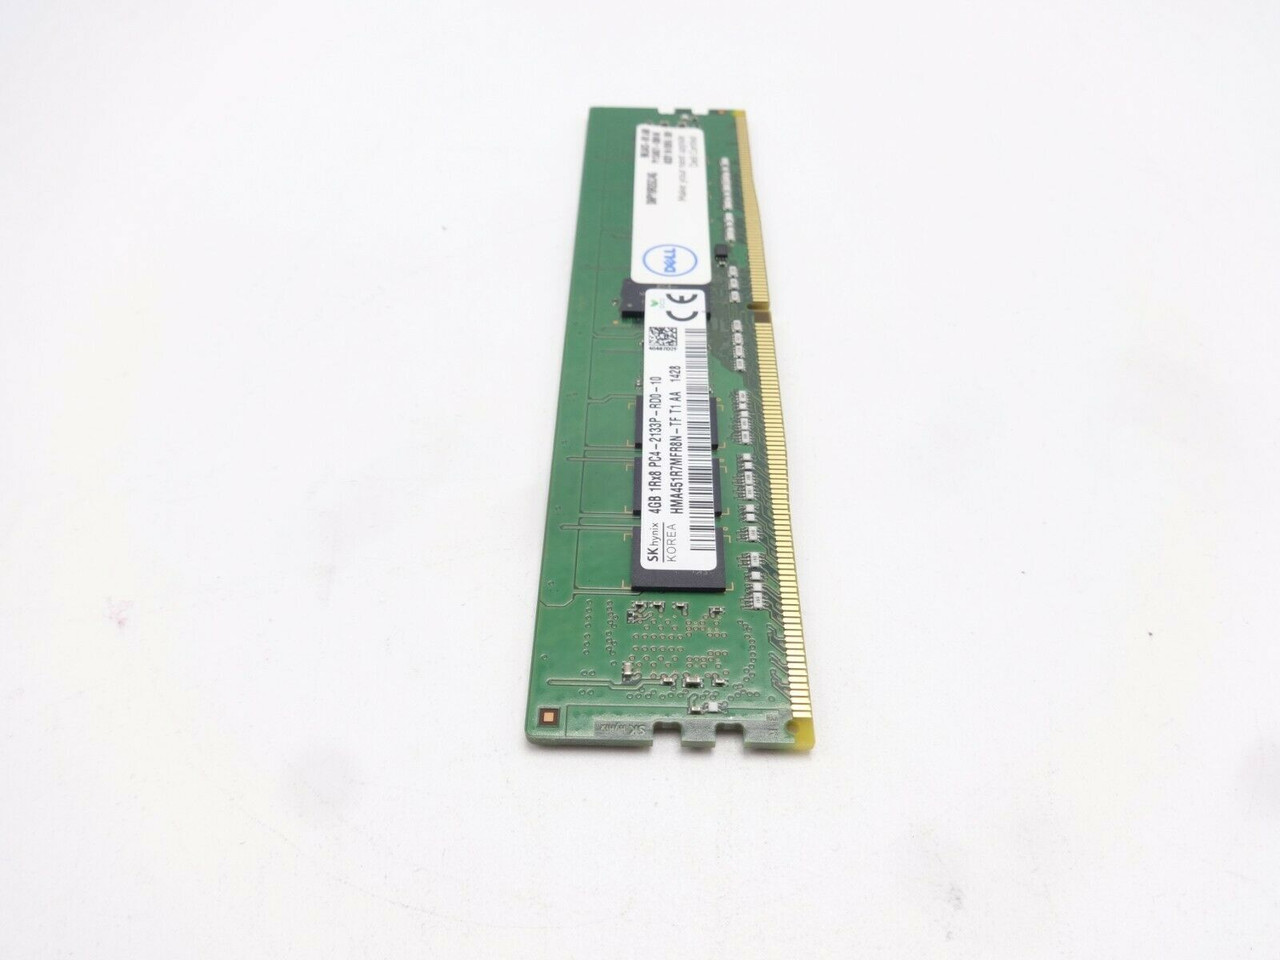 Hynix HMA451R7MFR8N-TF 4GB PC4 2133P 1700 1Rx8 DDR4 Server Memory Dimm